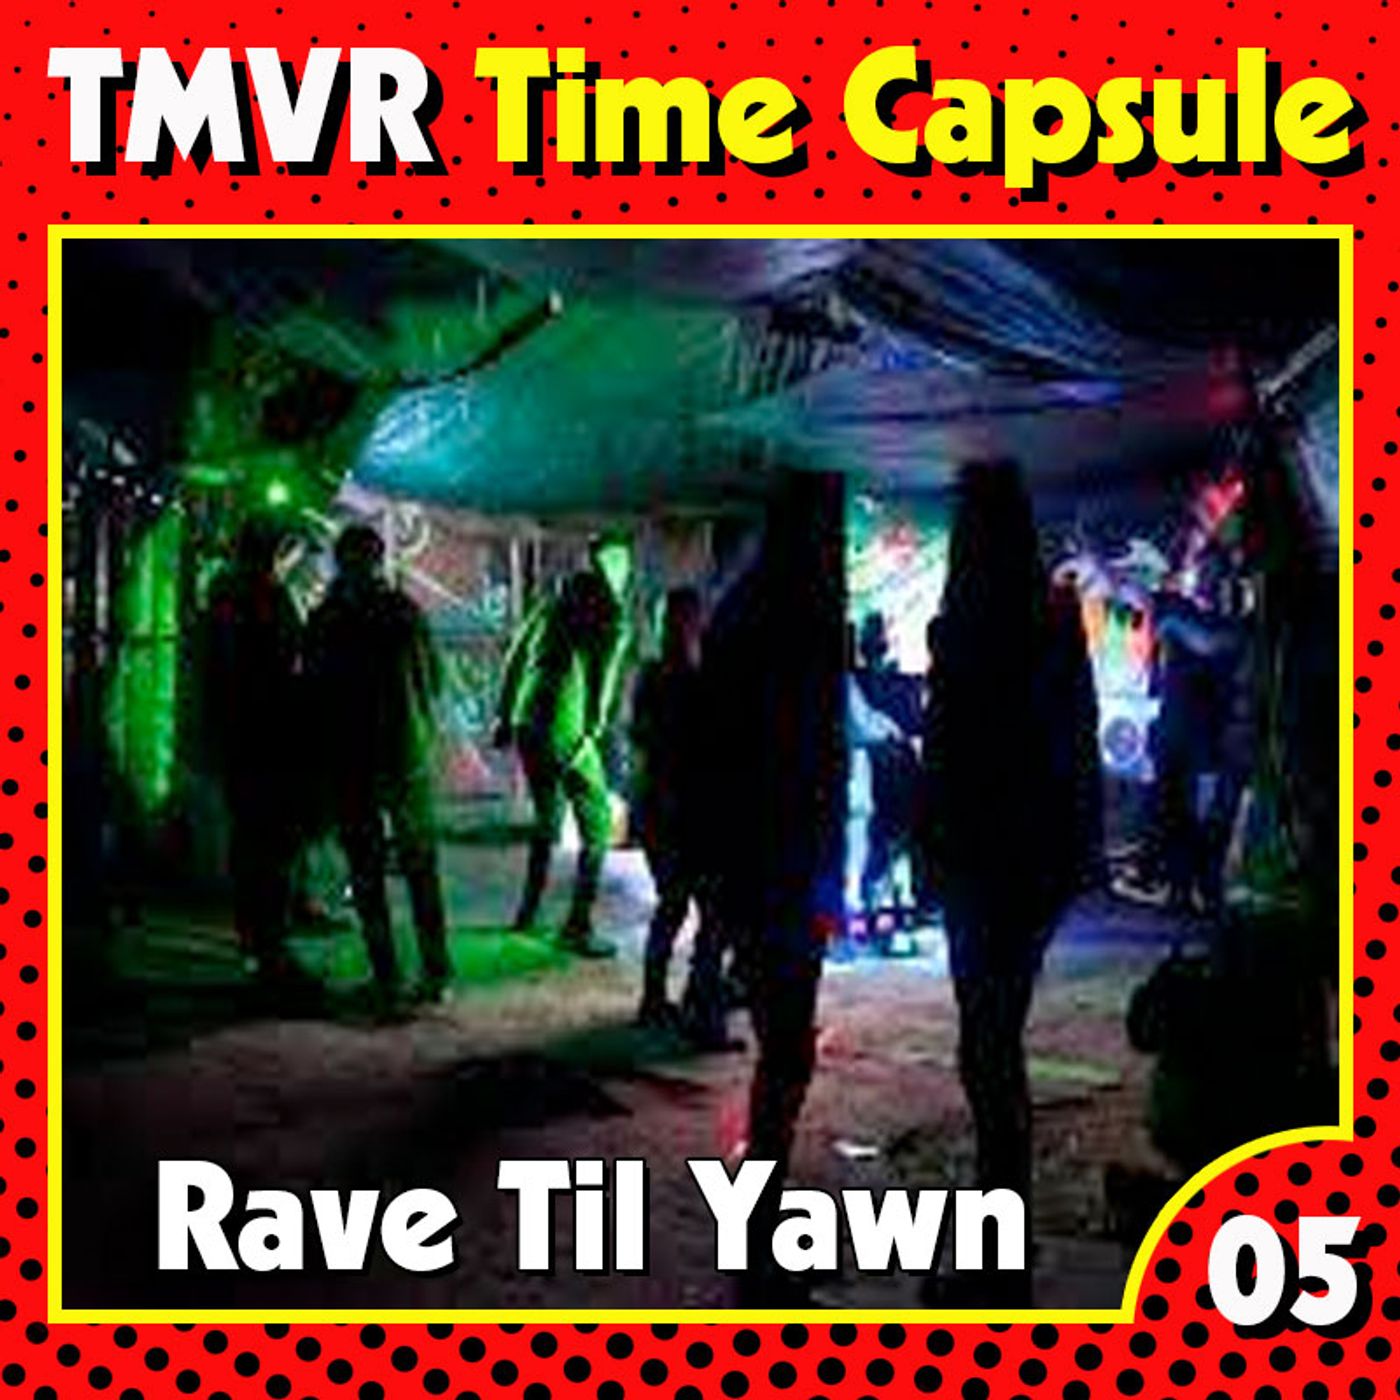 TMVR-Time Capsule-05-Rave Til Yawn